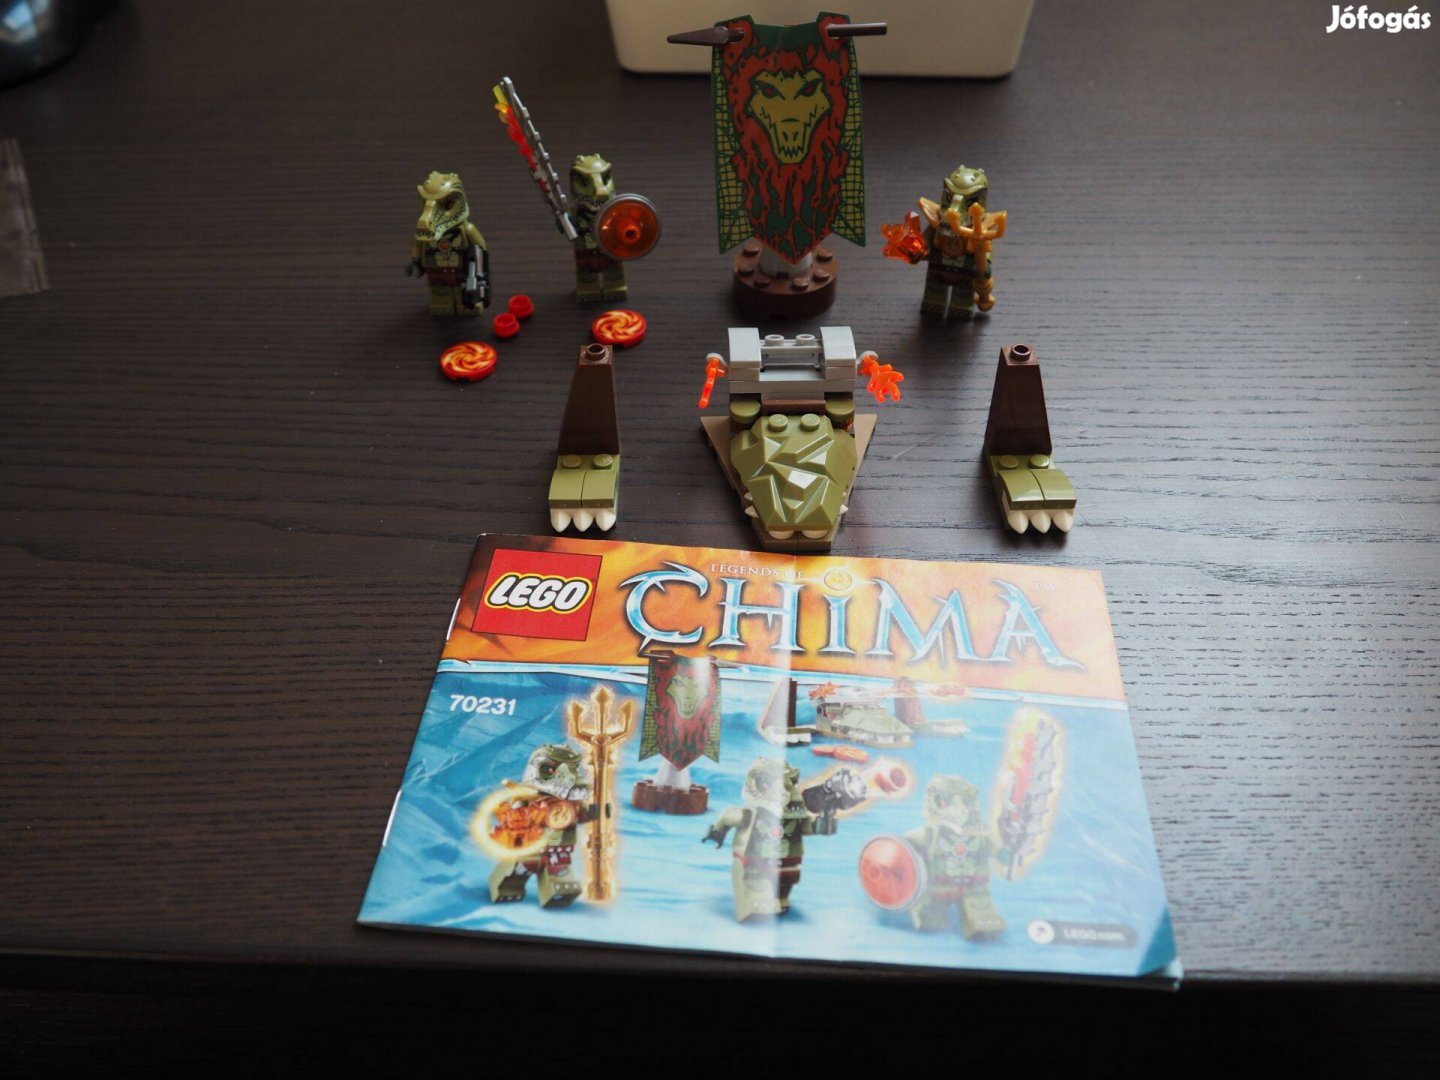 70231 LEGO Chima - A Krokodil törzs csapata